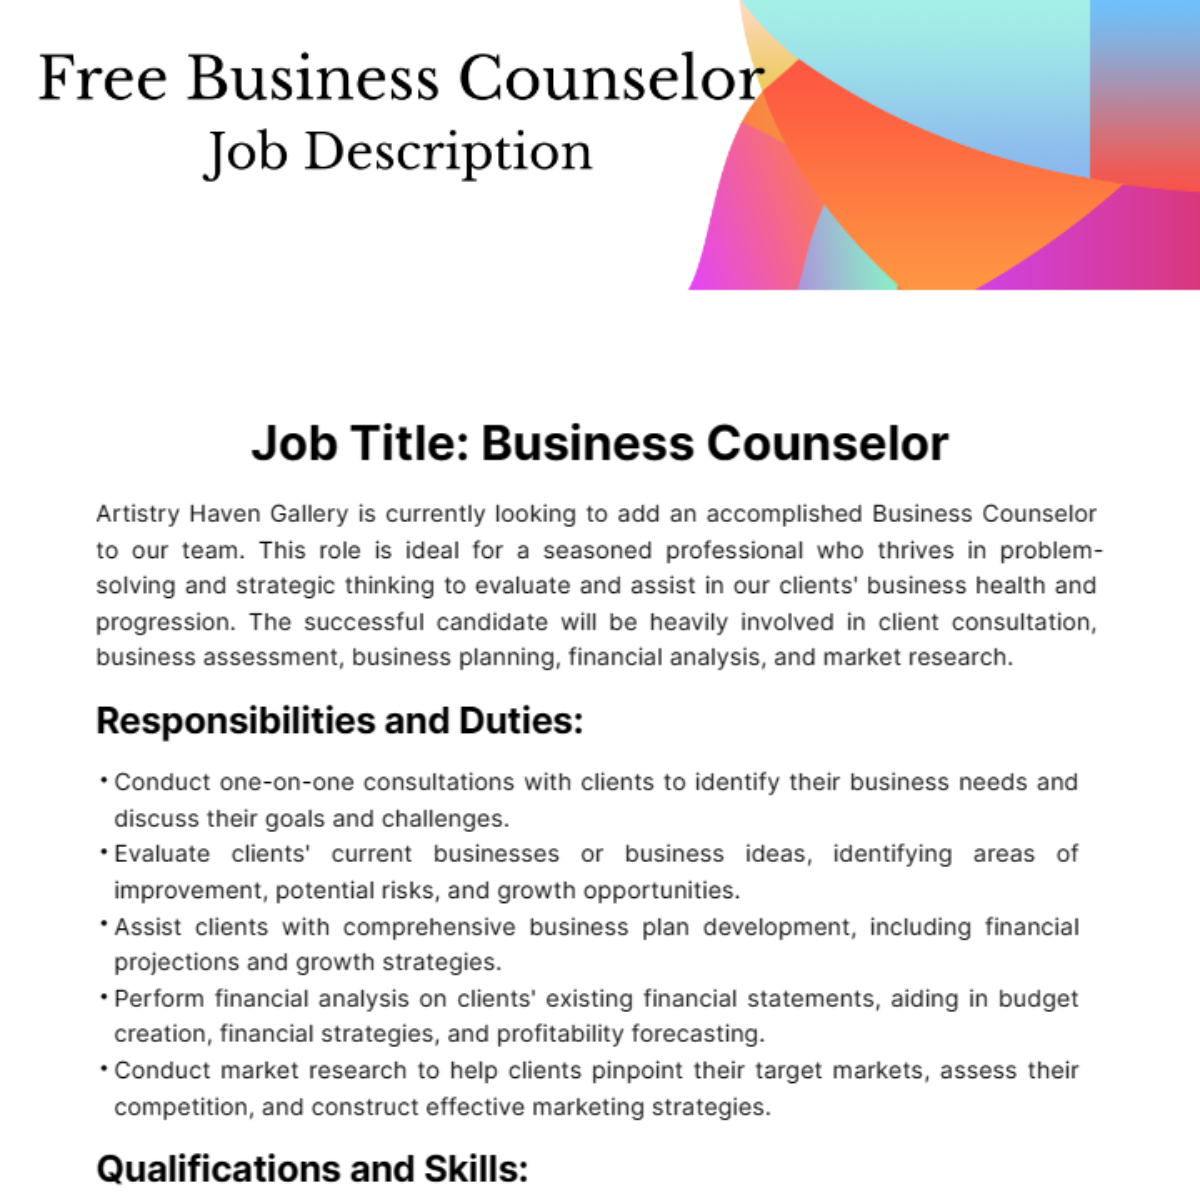 Free Business Counselor Job Description Template